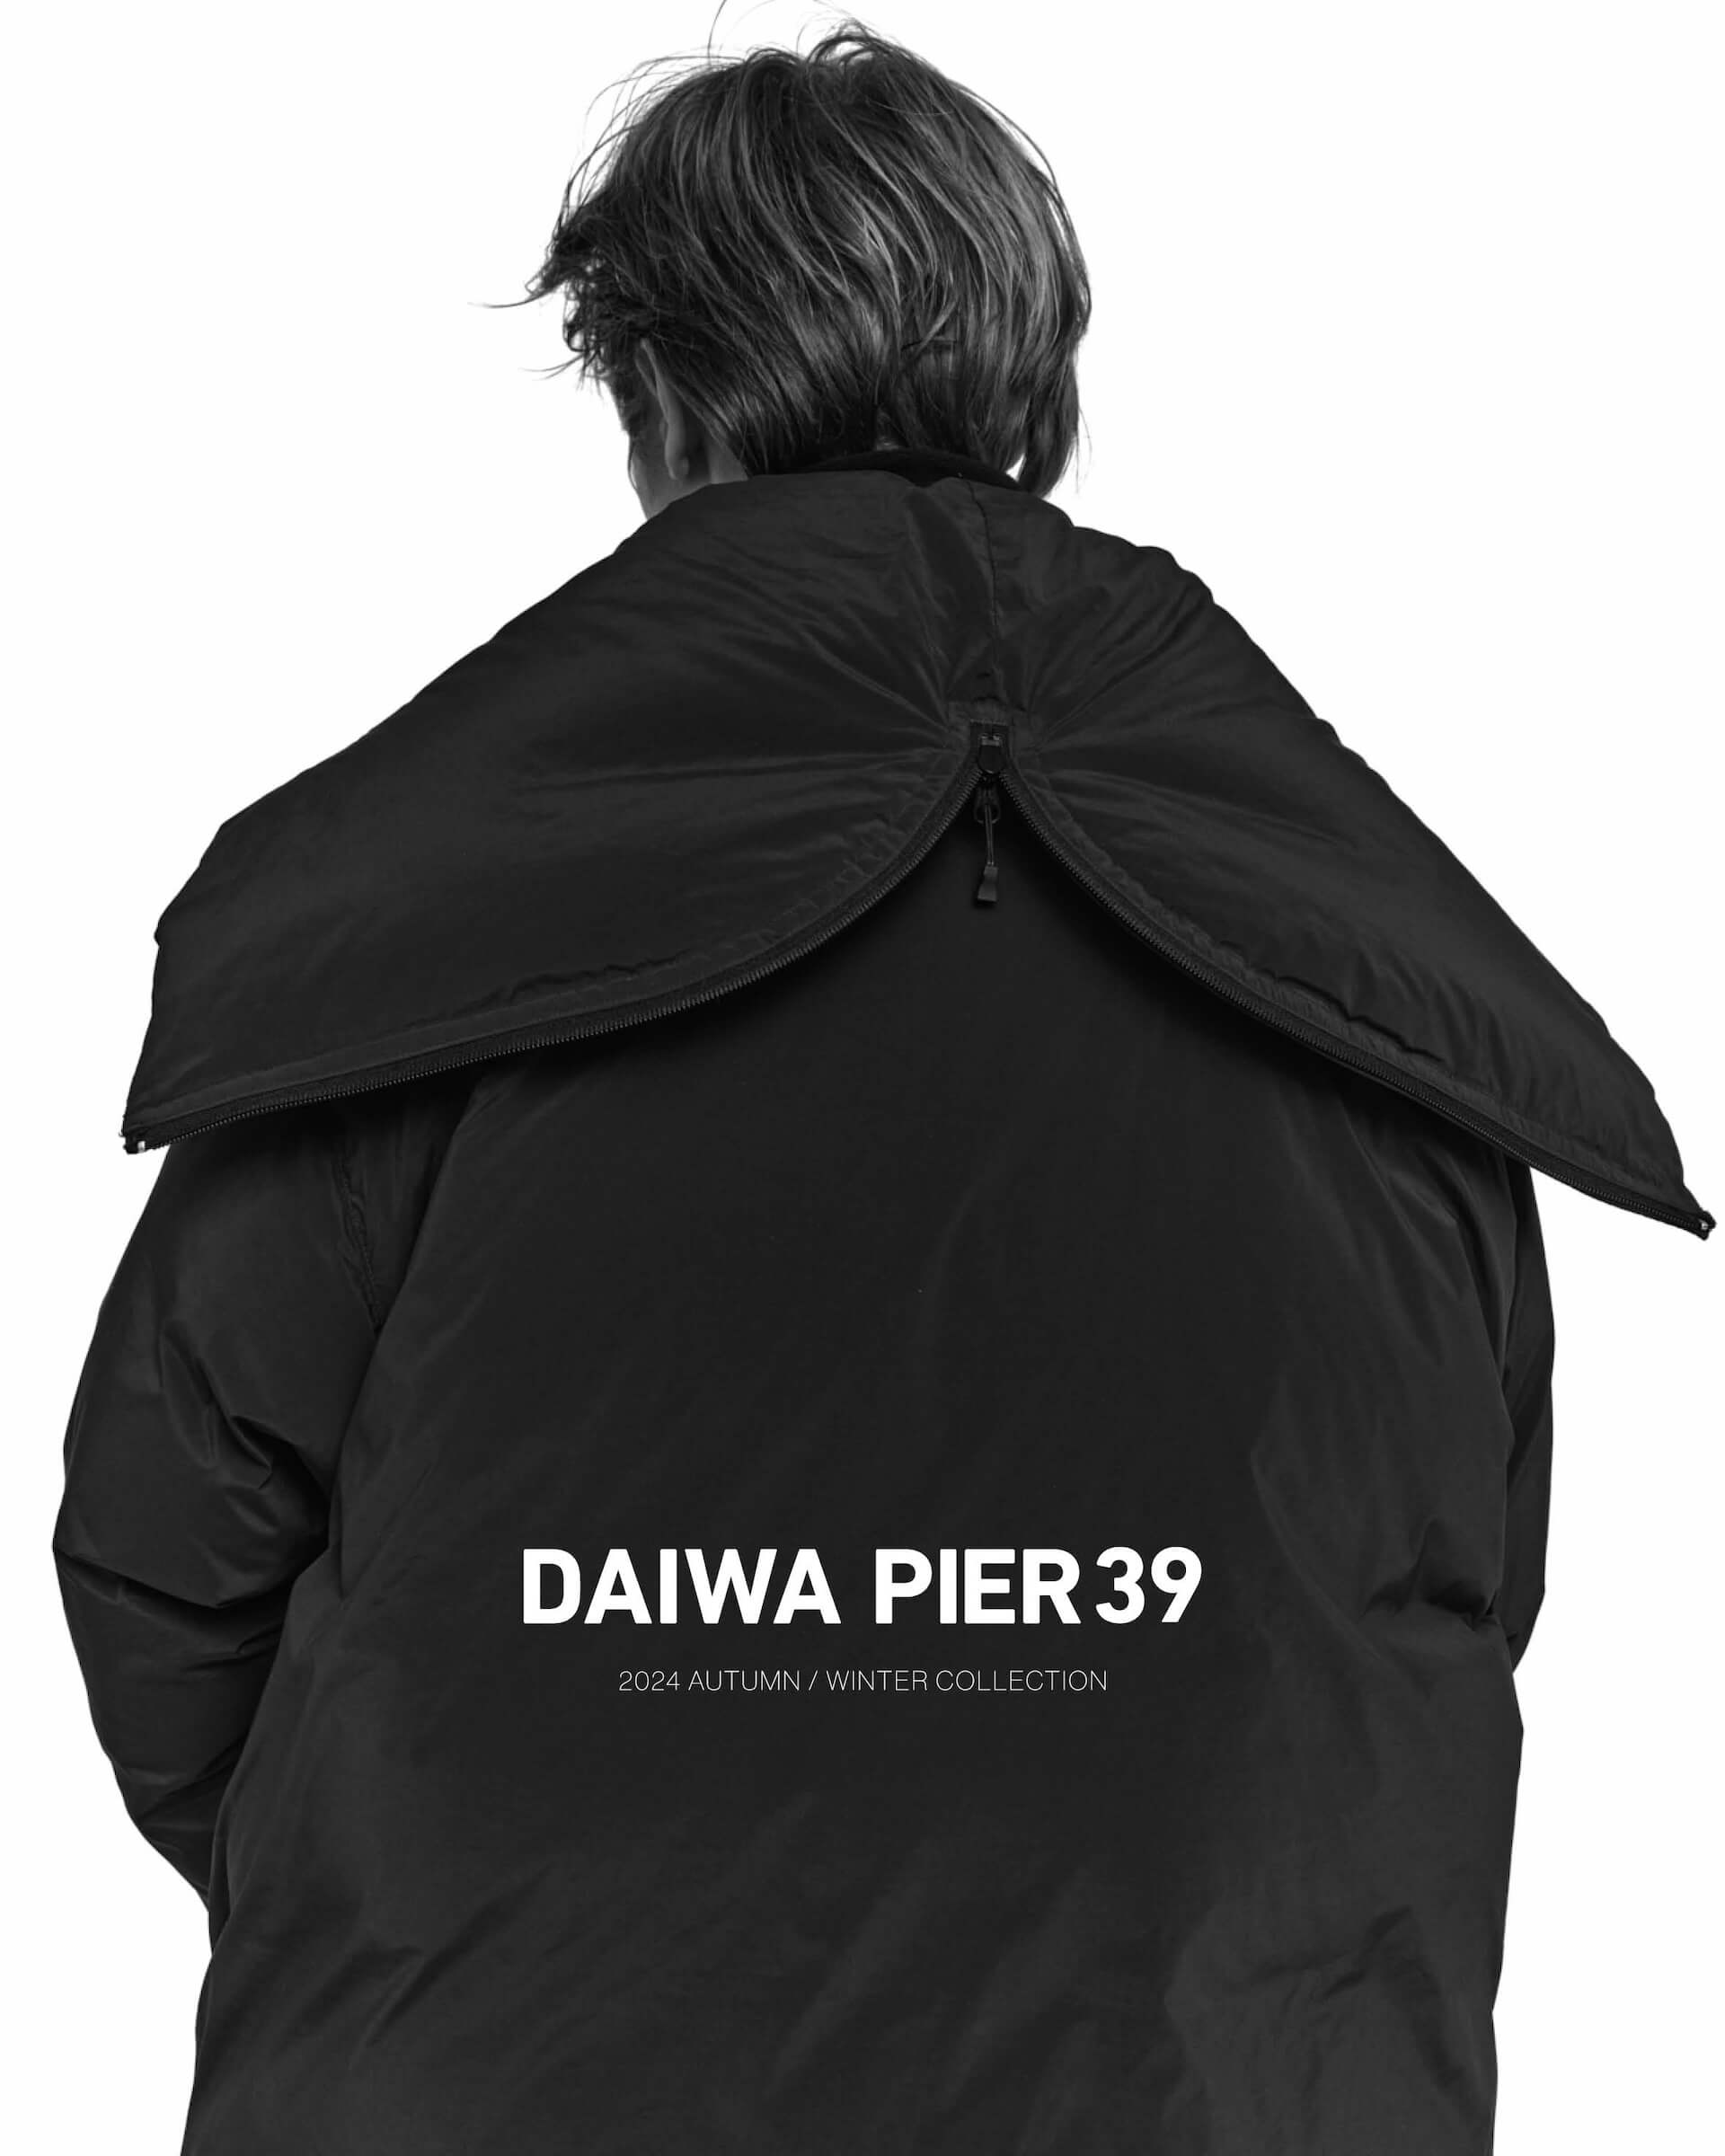 DAIWA PIER39の2024年秋冬コレクションが発表｜ミリタリーの機能美と2000年代のエクストリームスポーツのエッセンスが融合したアイテムが登場 lifefashion240719-daiwa-pier392